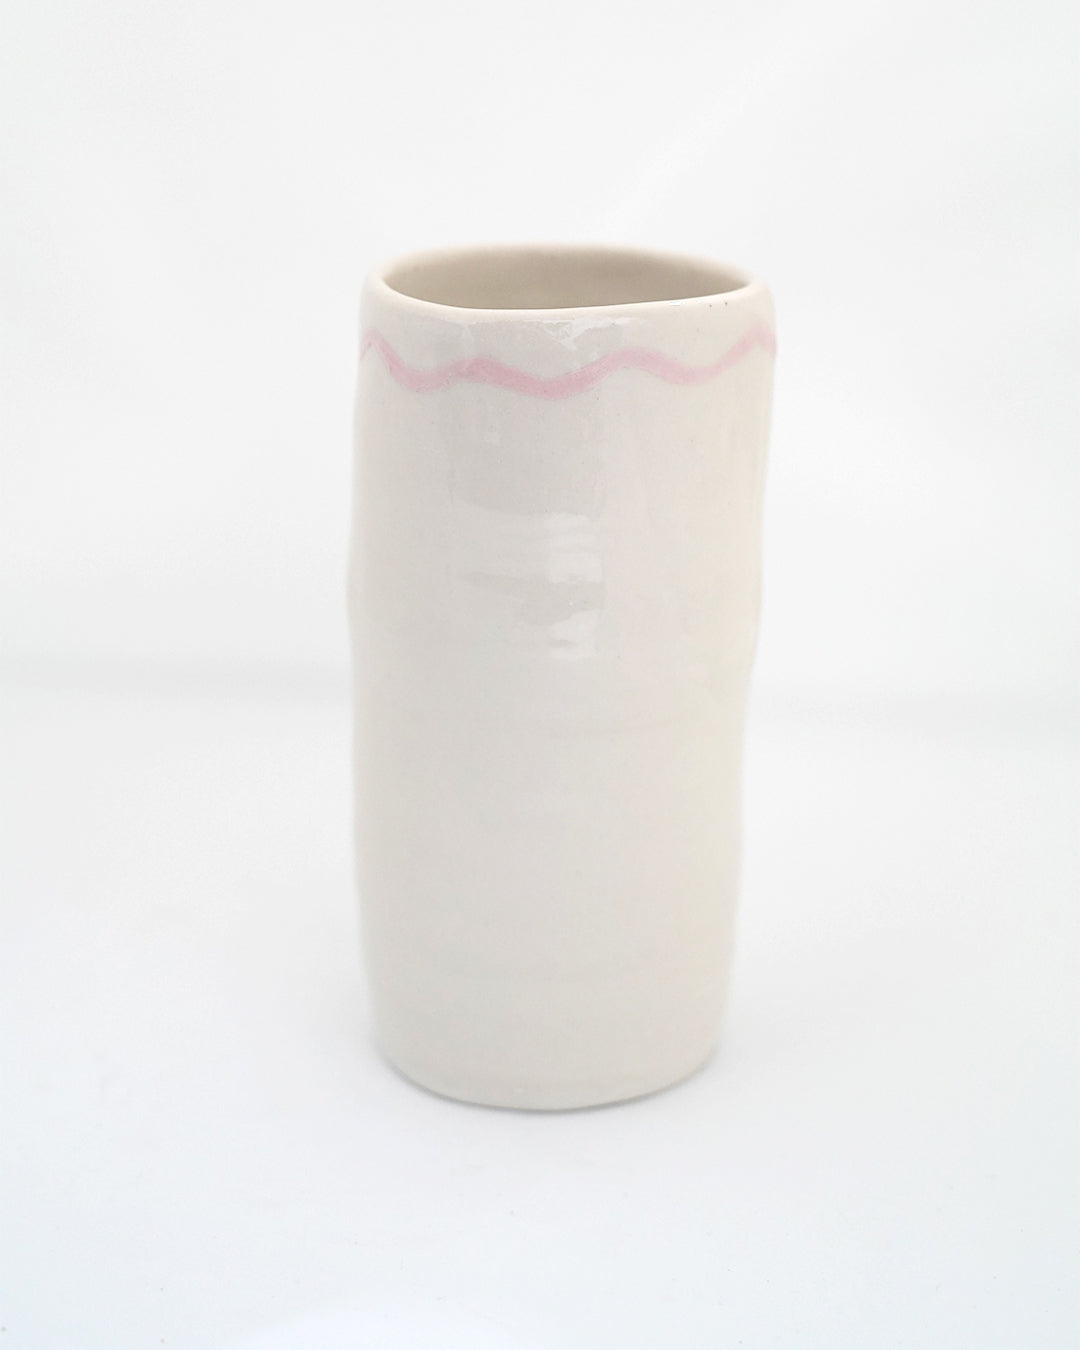 Squiggle Vase in Icing Sugar